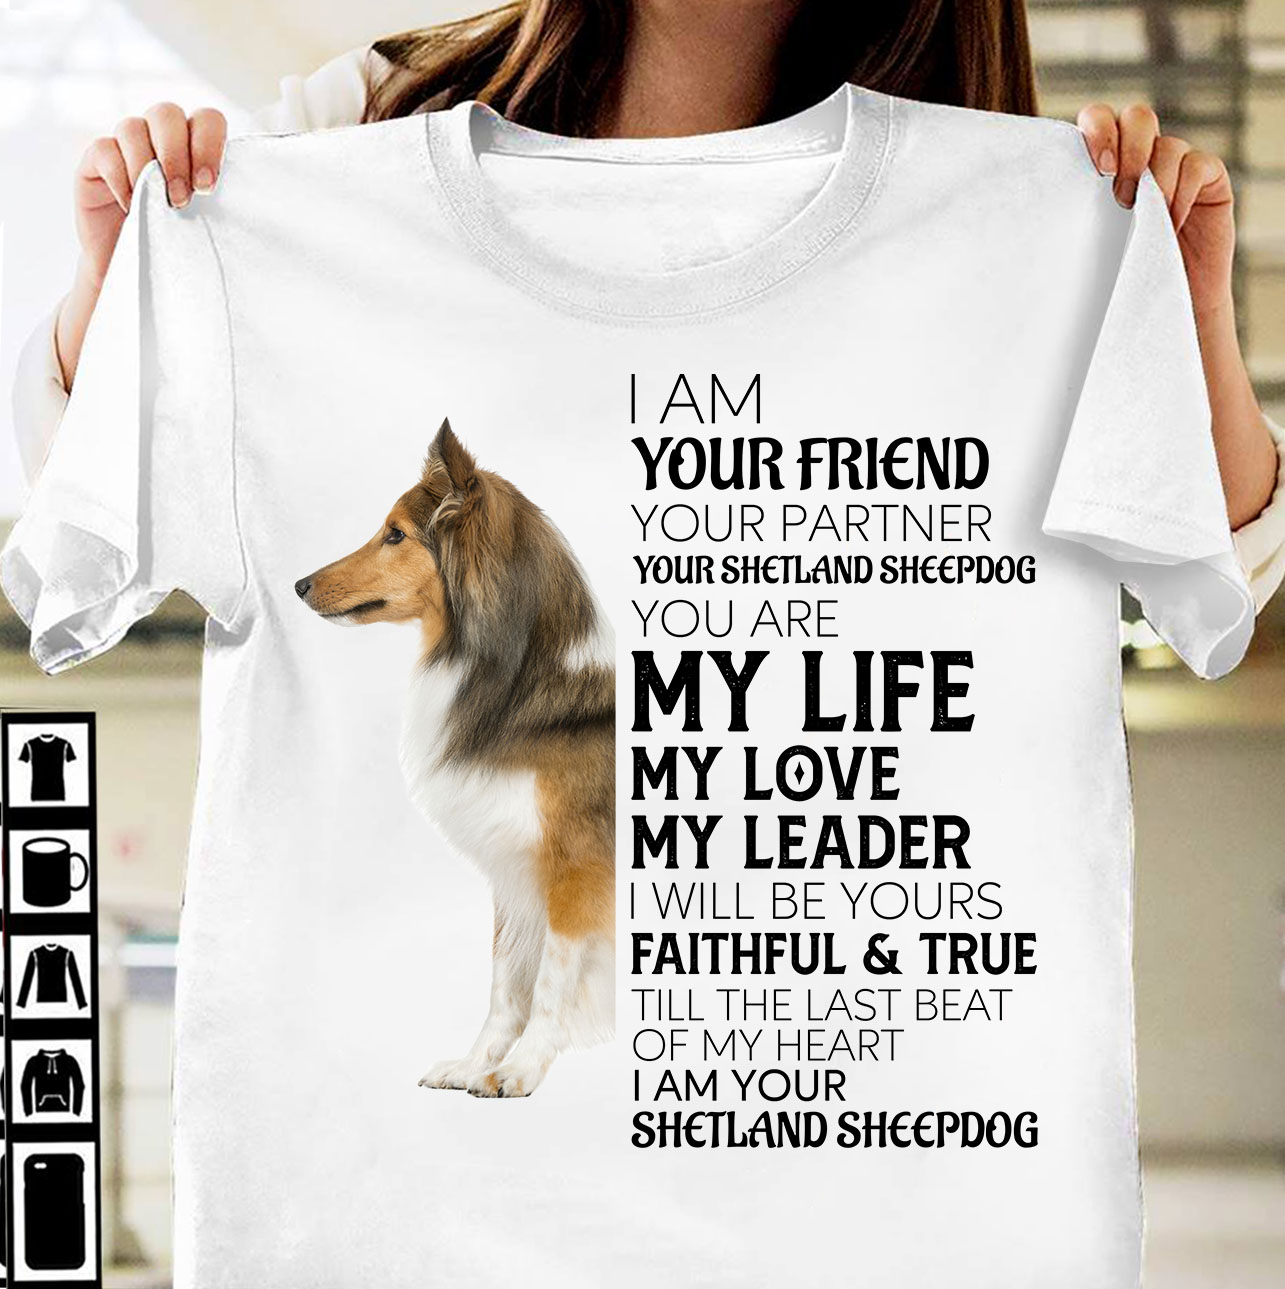 I am your friend, your partner, your Shetland sheepdog - Shetland sheepdog